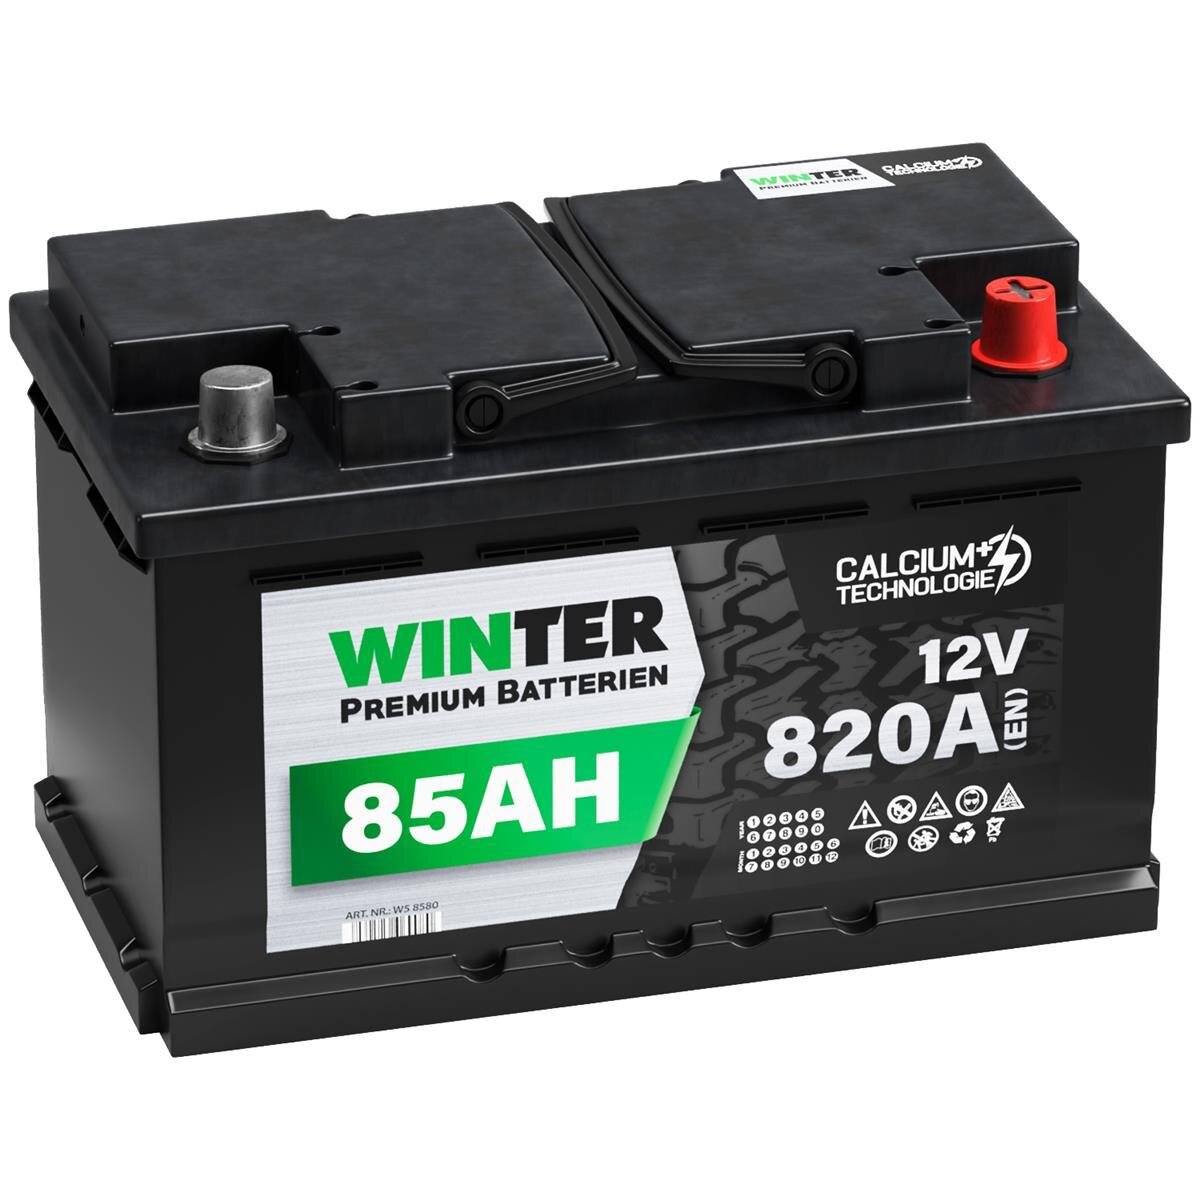 https://www.batteriespezialist.de/media/image/product/7836/lg/winter-autobatterie-85ah-12v.jpg